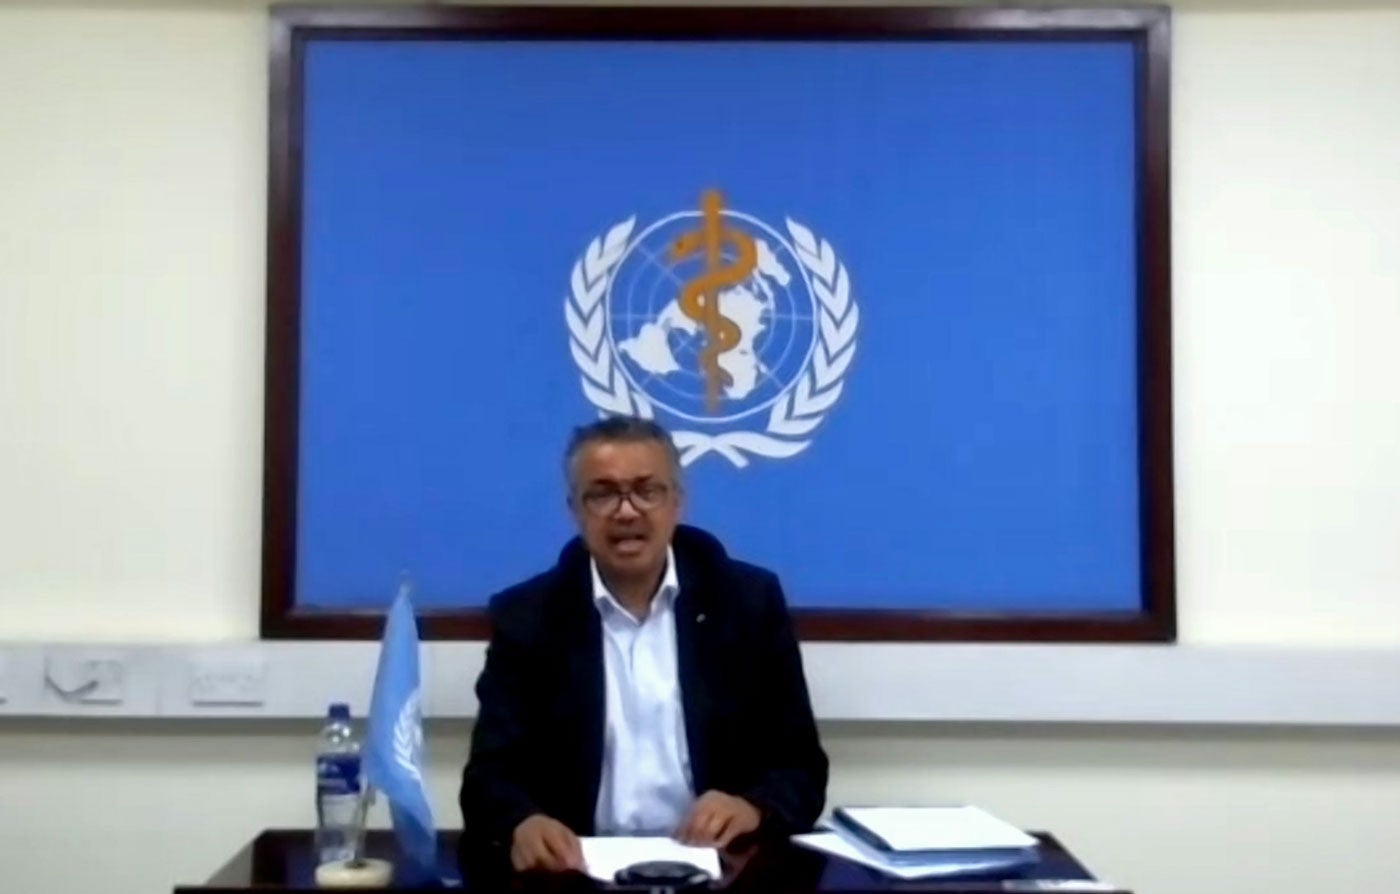 Director General of the World Health Organization (WHO), Tedros Adhanom Ghebreyesus